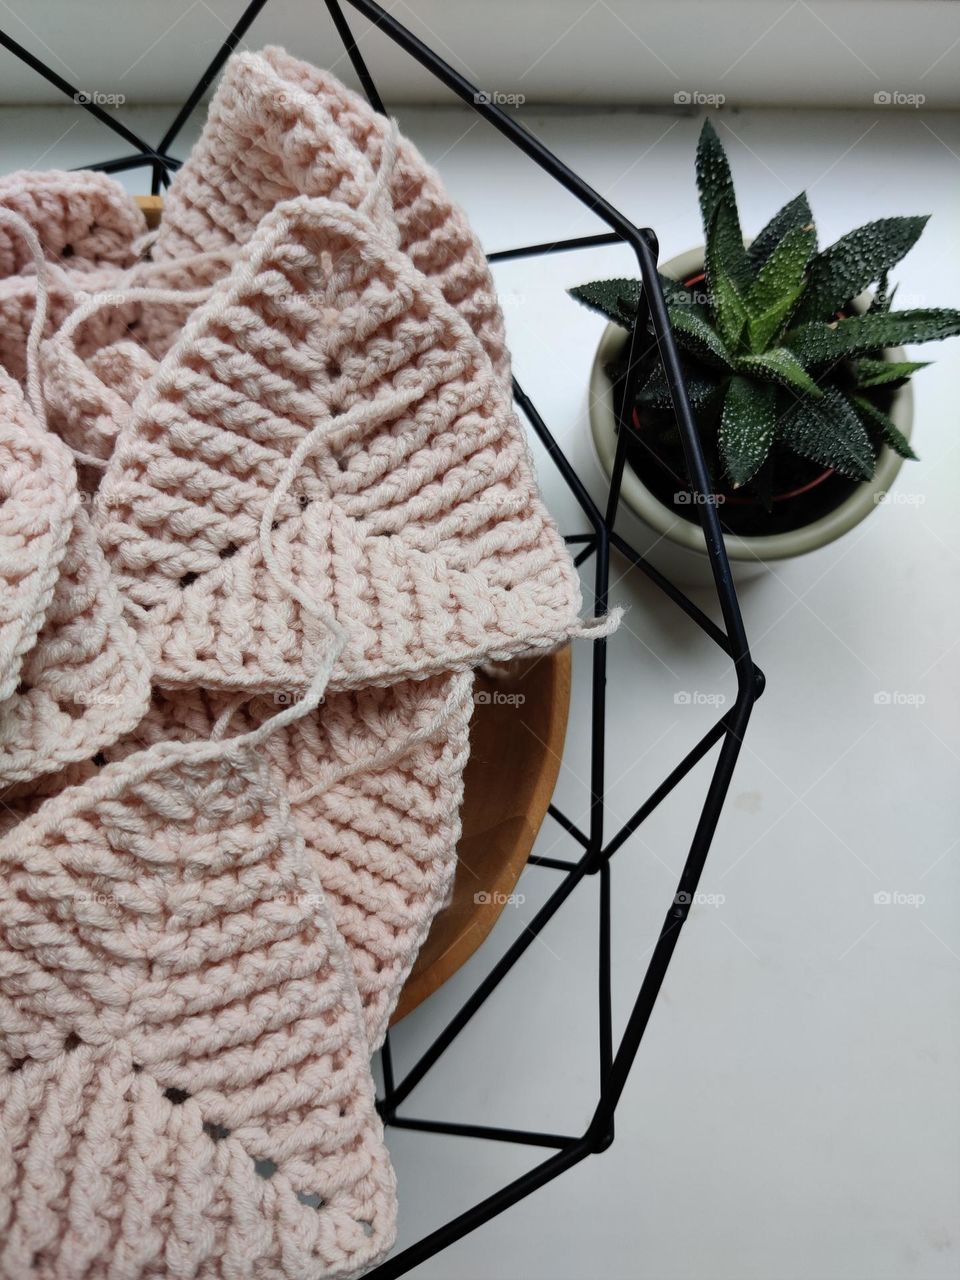 Patches of crochet blanket in progress